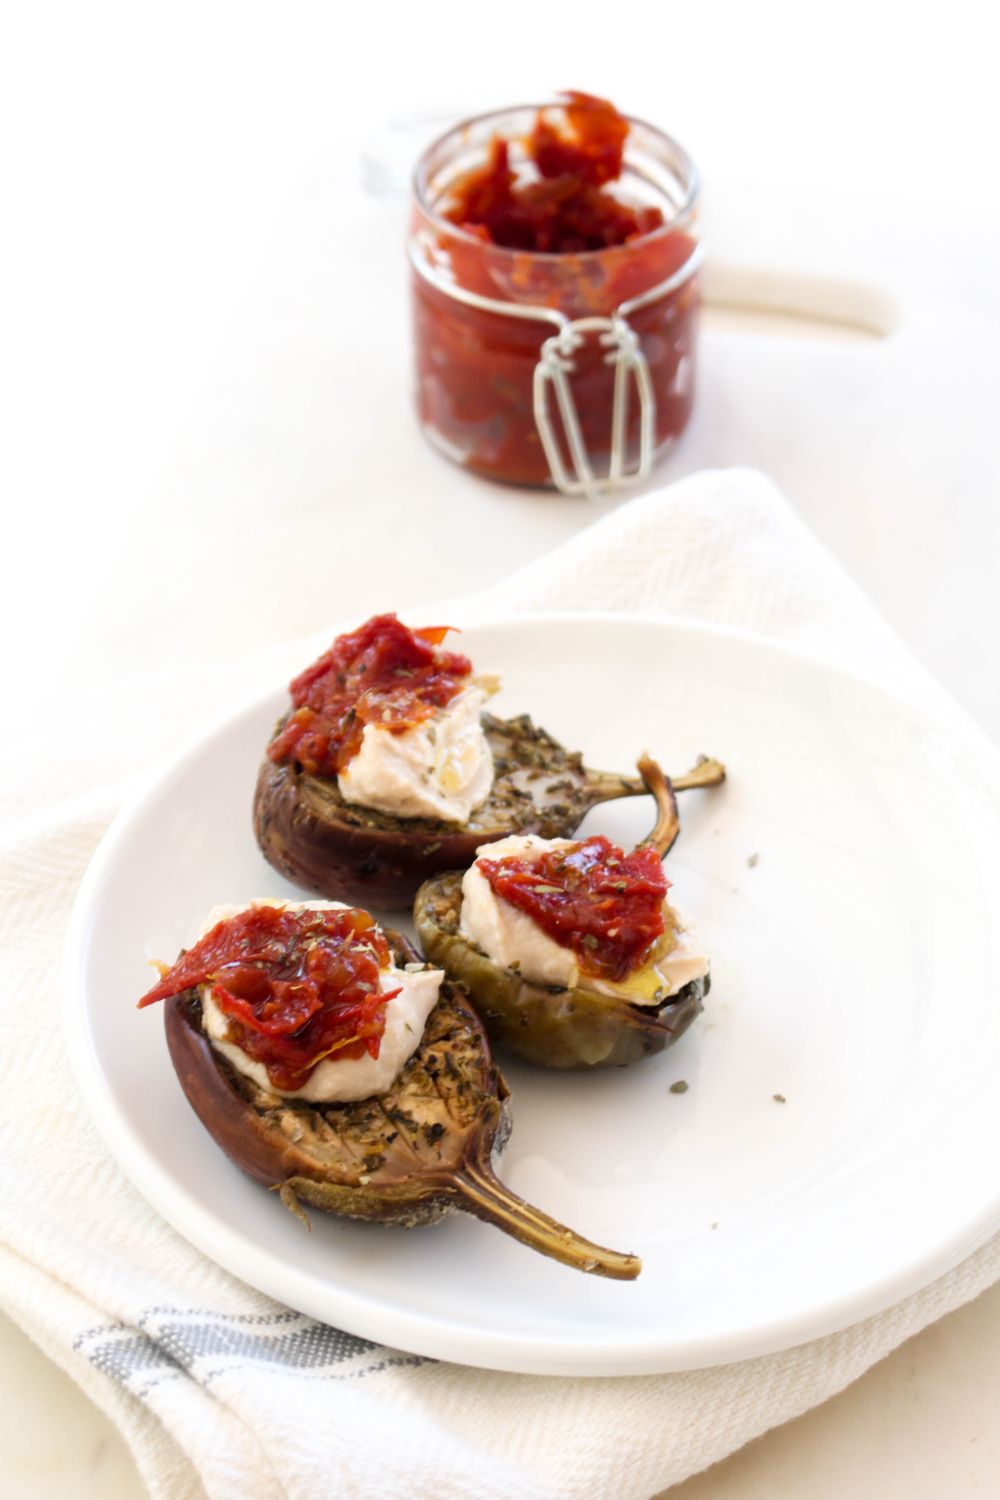 Slow roasted eggplant with hummus and tomato jam recipe